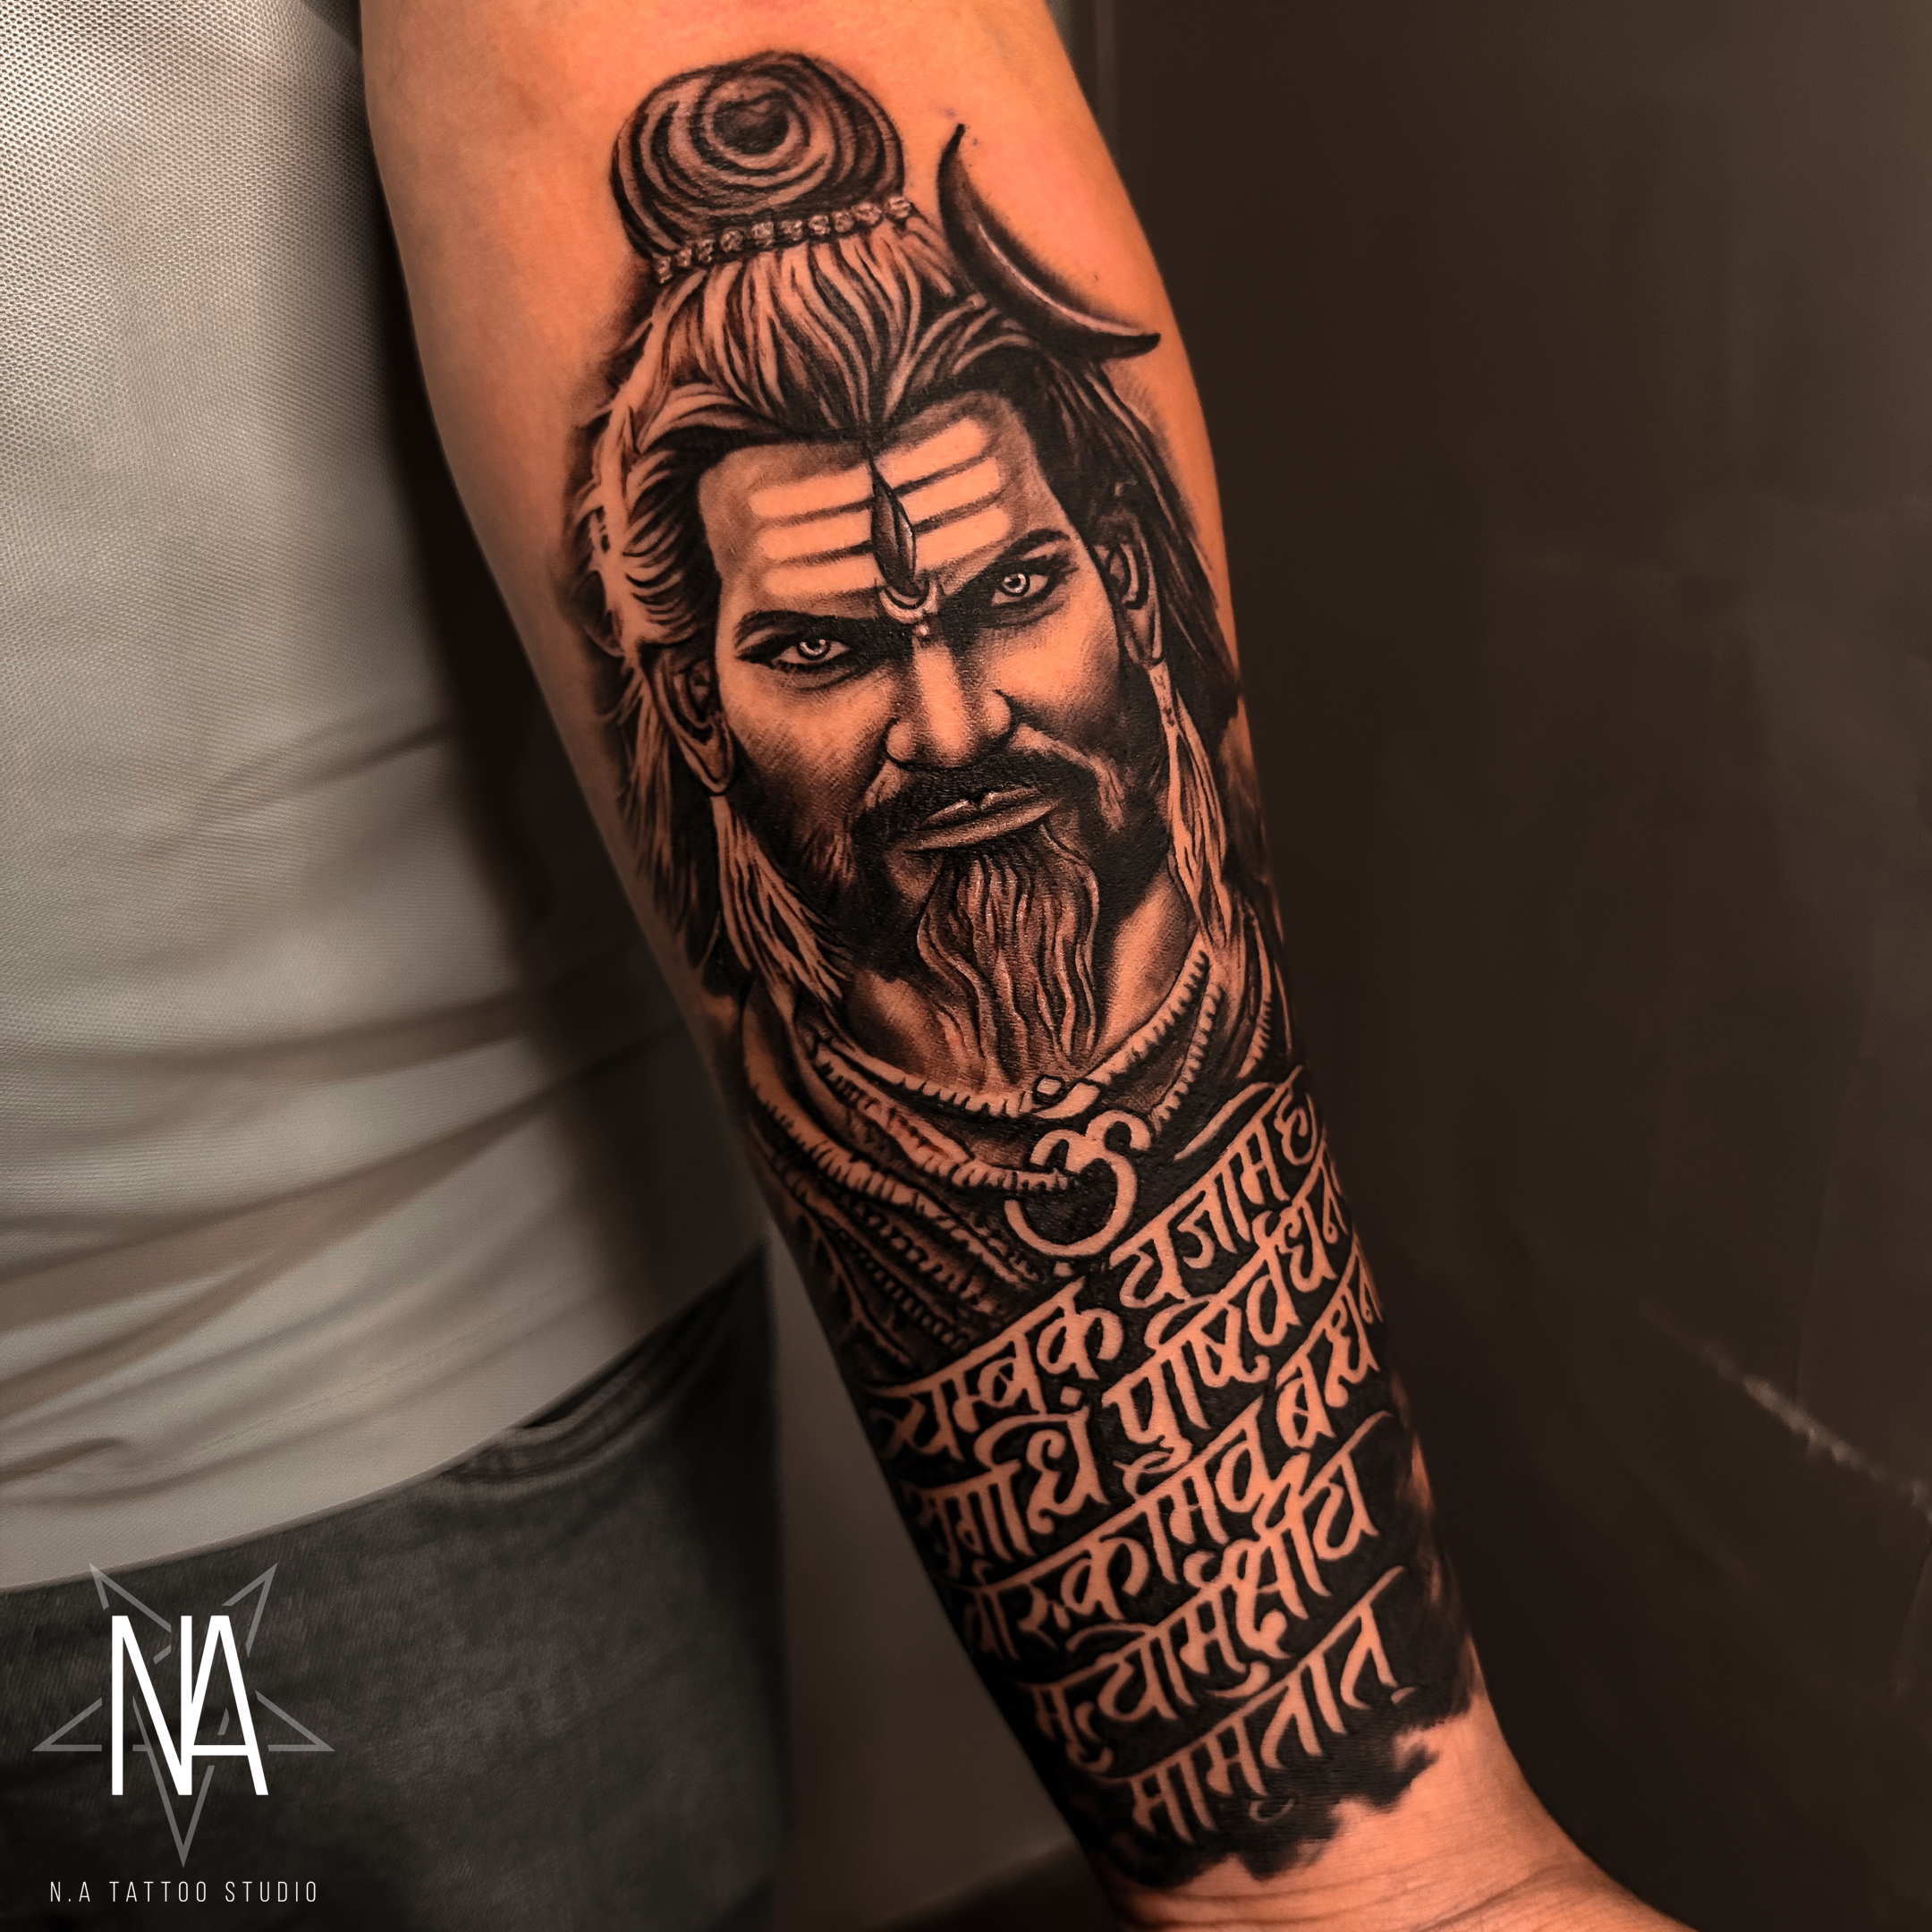 🌼सावन स्पेशल महादेव आर्ट Images • Shiva tattoo studio 9823416985  (@224738025) on ShareChat